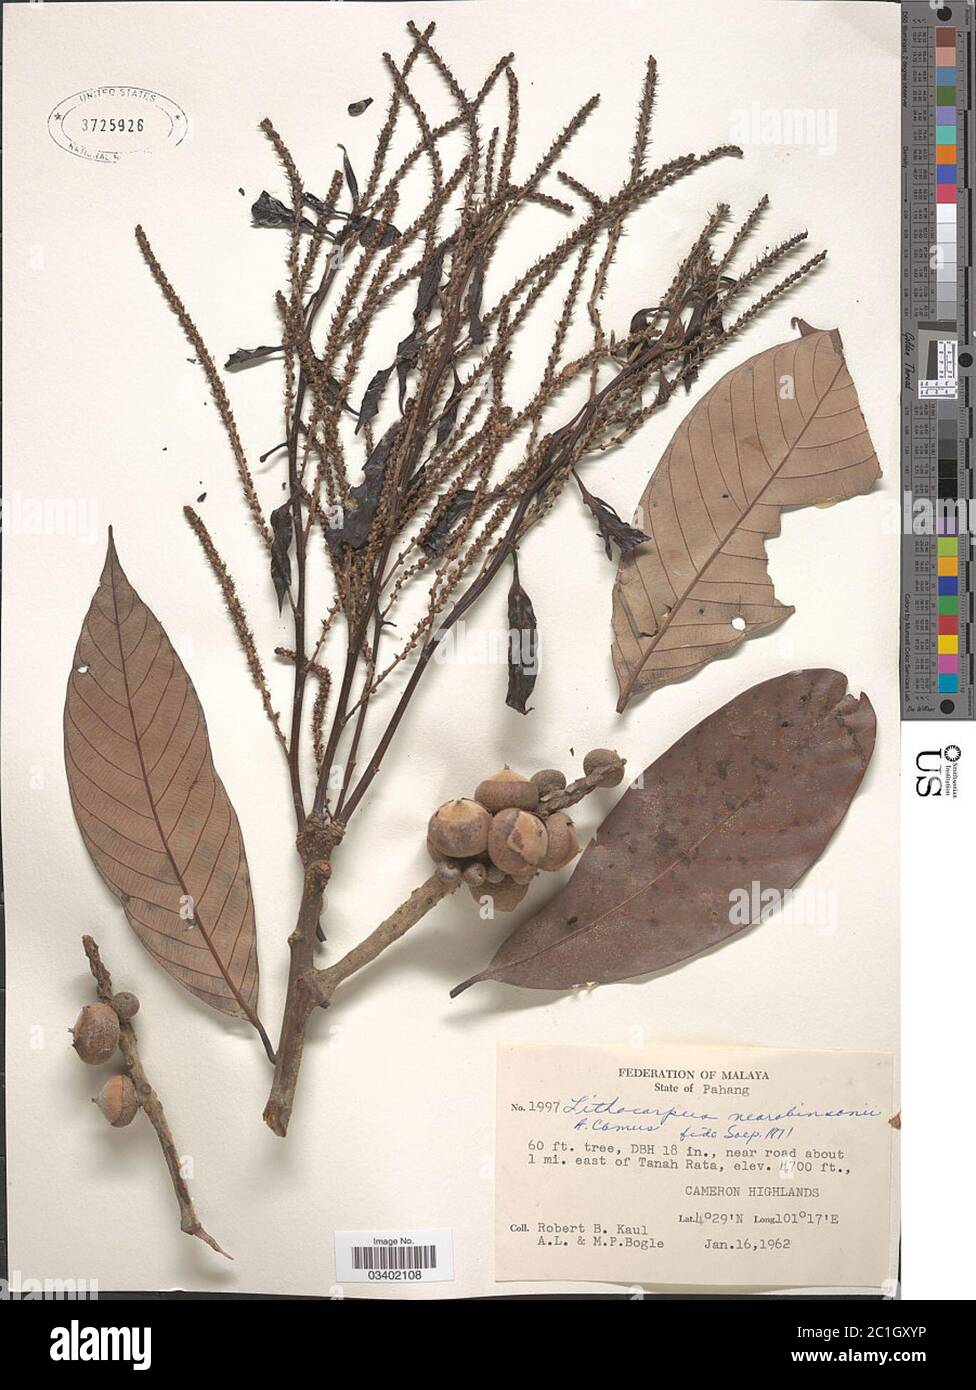 Lithocarpus neorobinsonii A Camus Lithocarpus neorobinsonii A Camus. Stock Photo